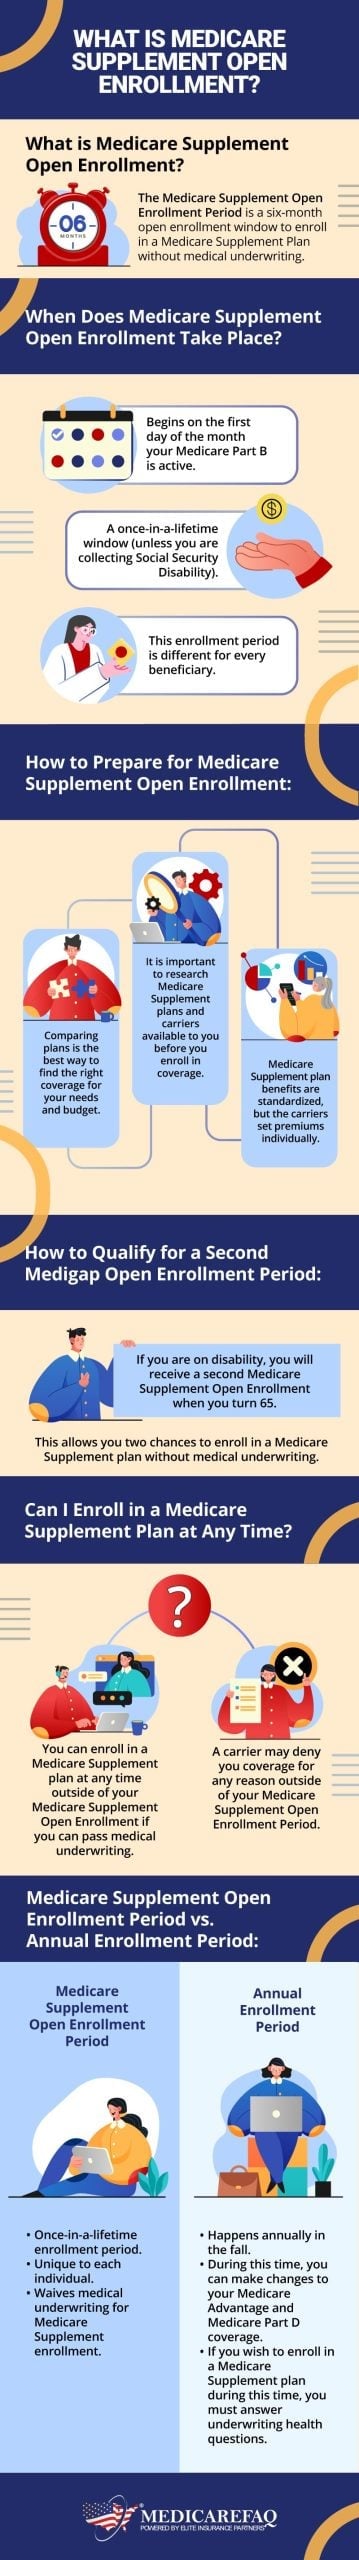 Medicare Supplement Open Enrollment Period information.